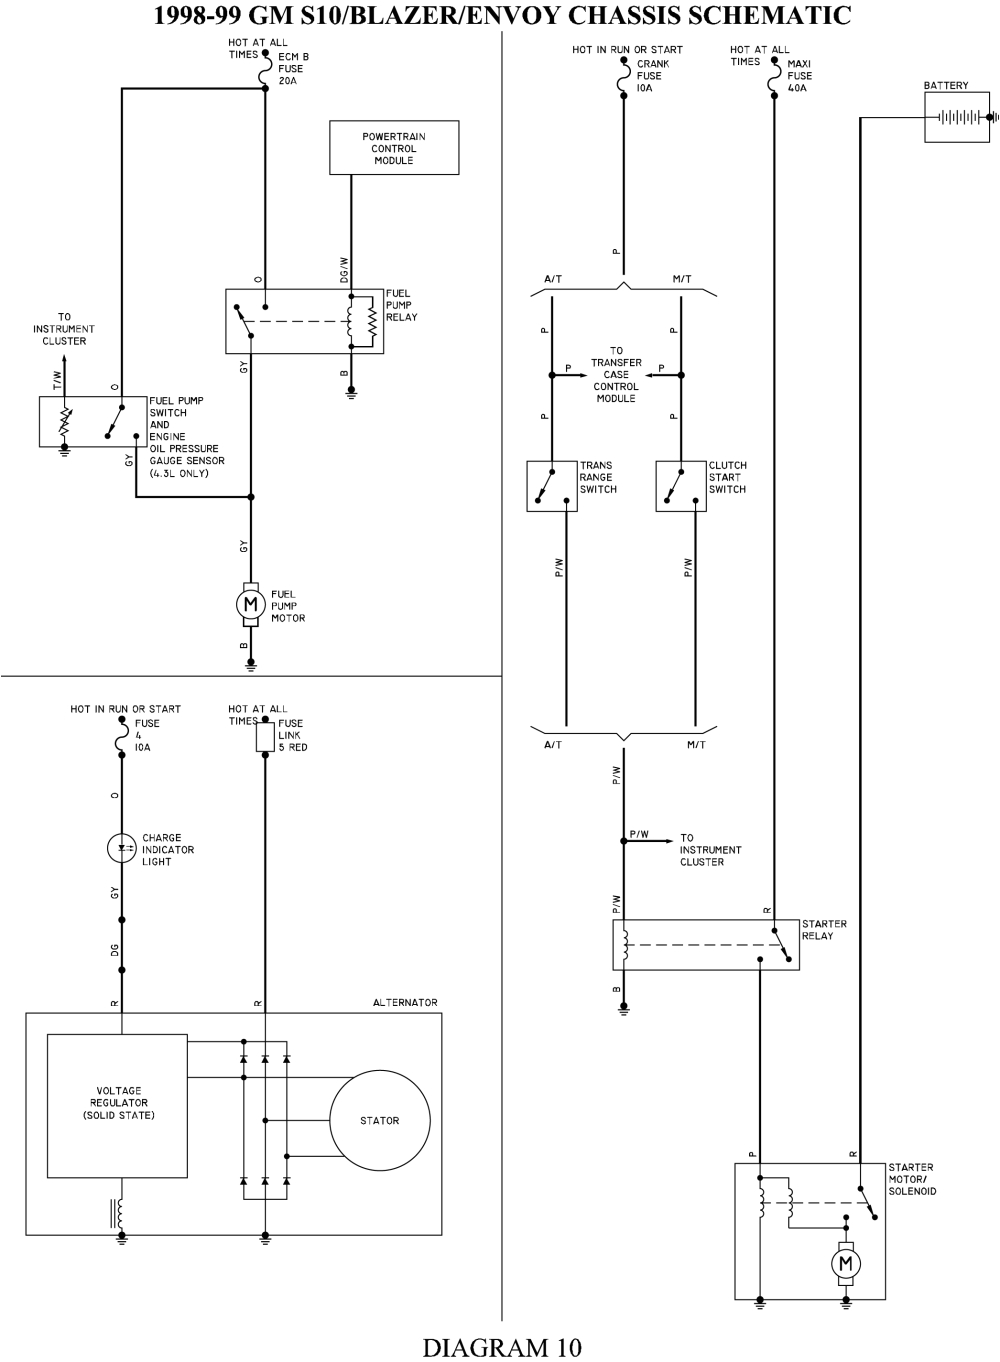 2000 s10 system waring diagrams wiring diagram center 2000 s10 system waring diagrams